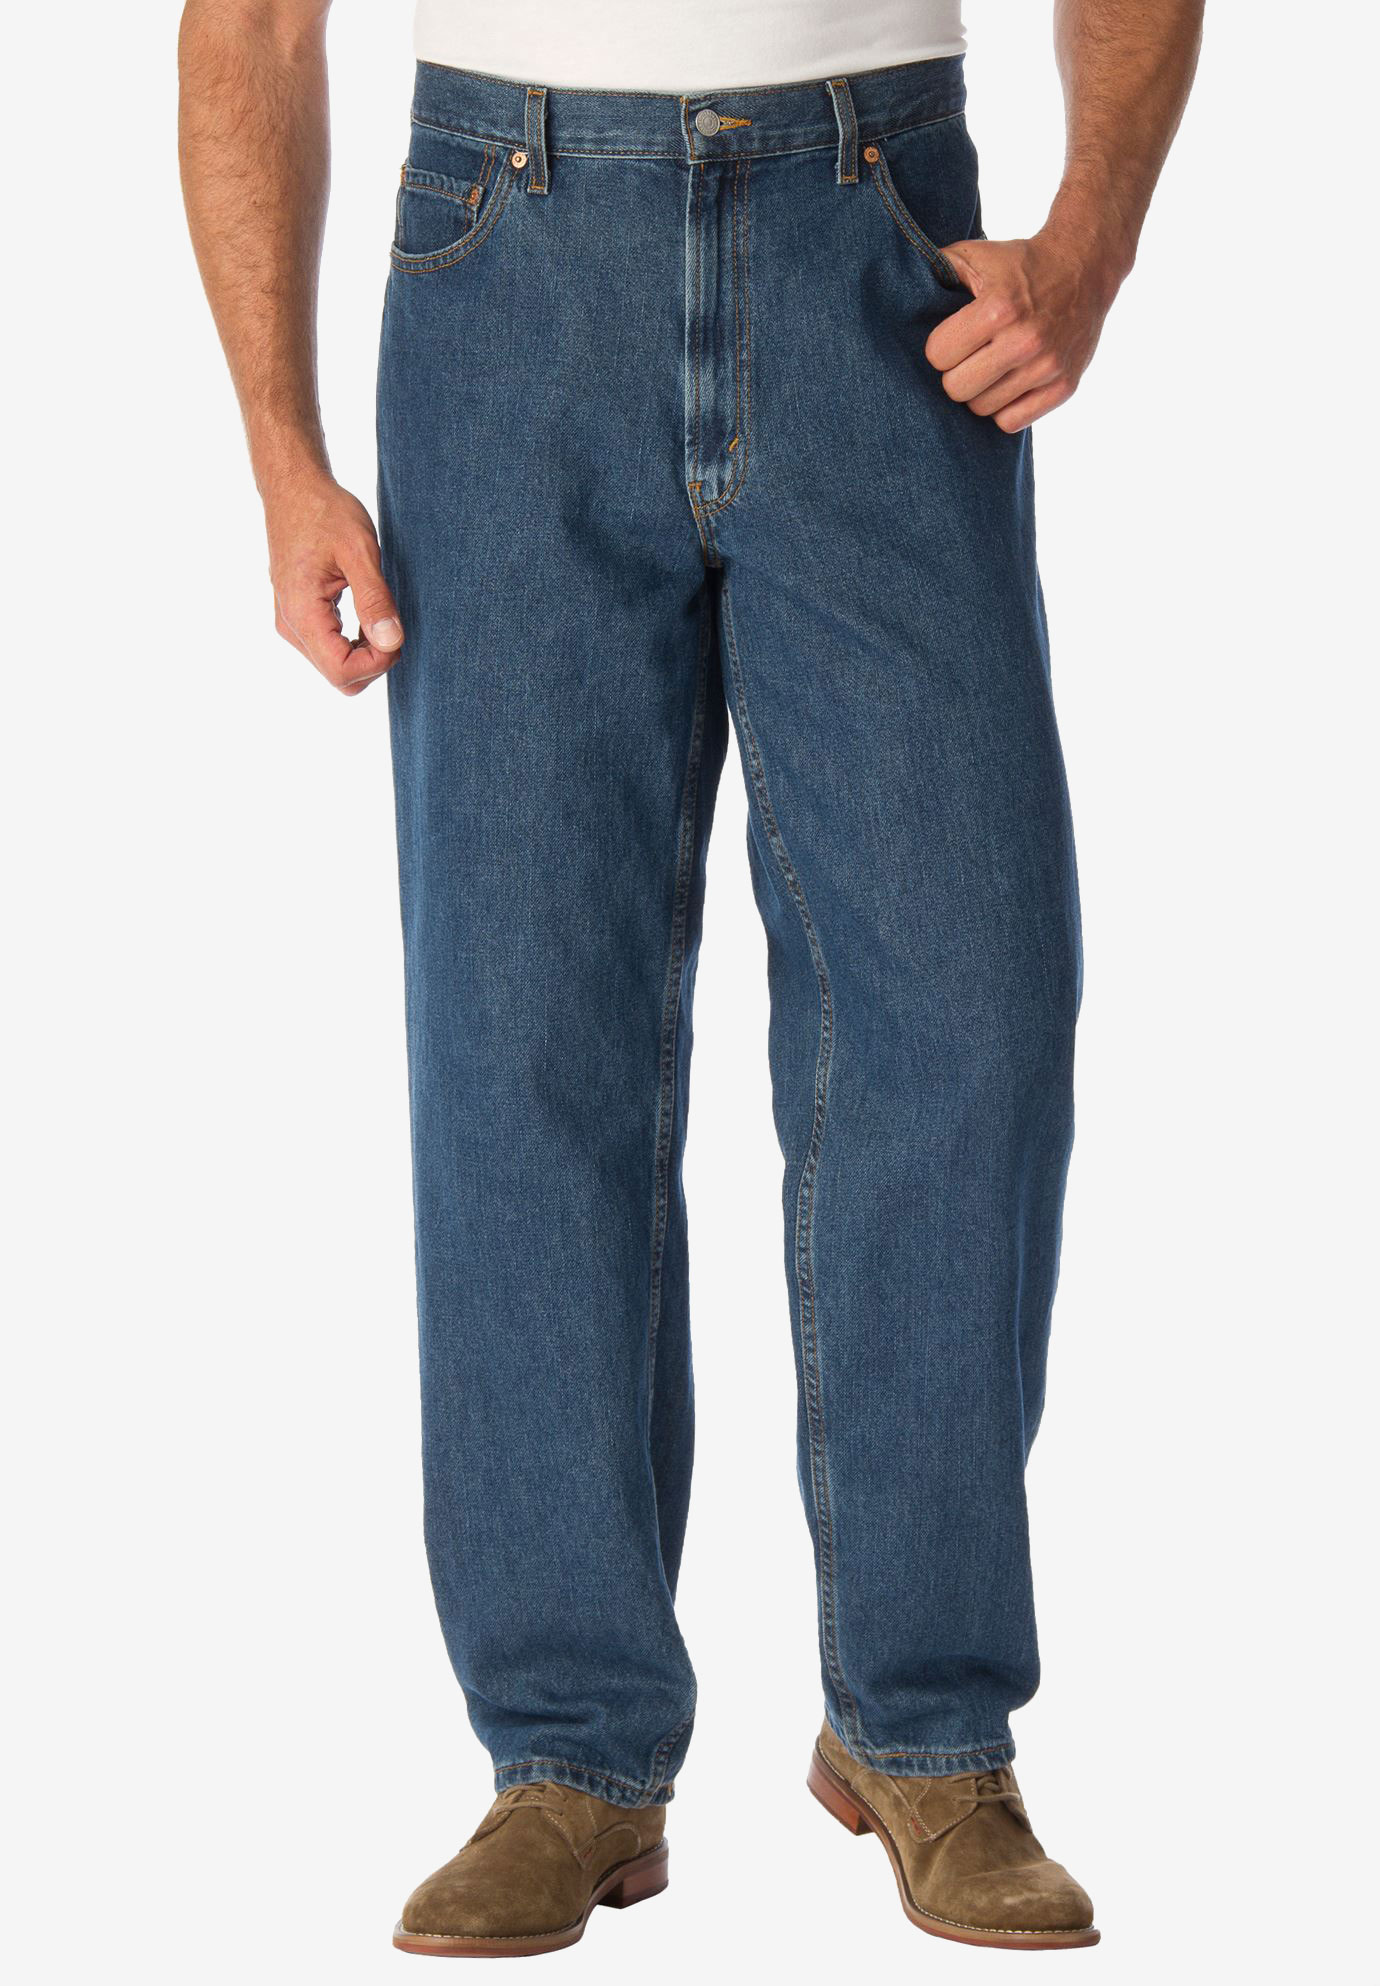 levi 560 jeans amazon